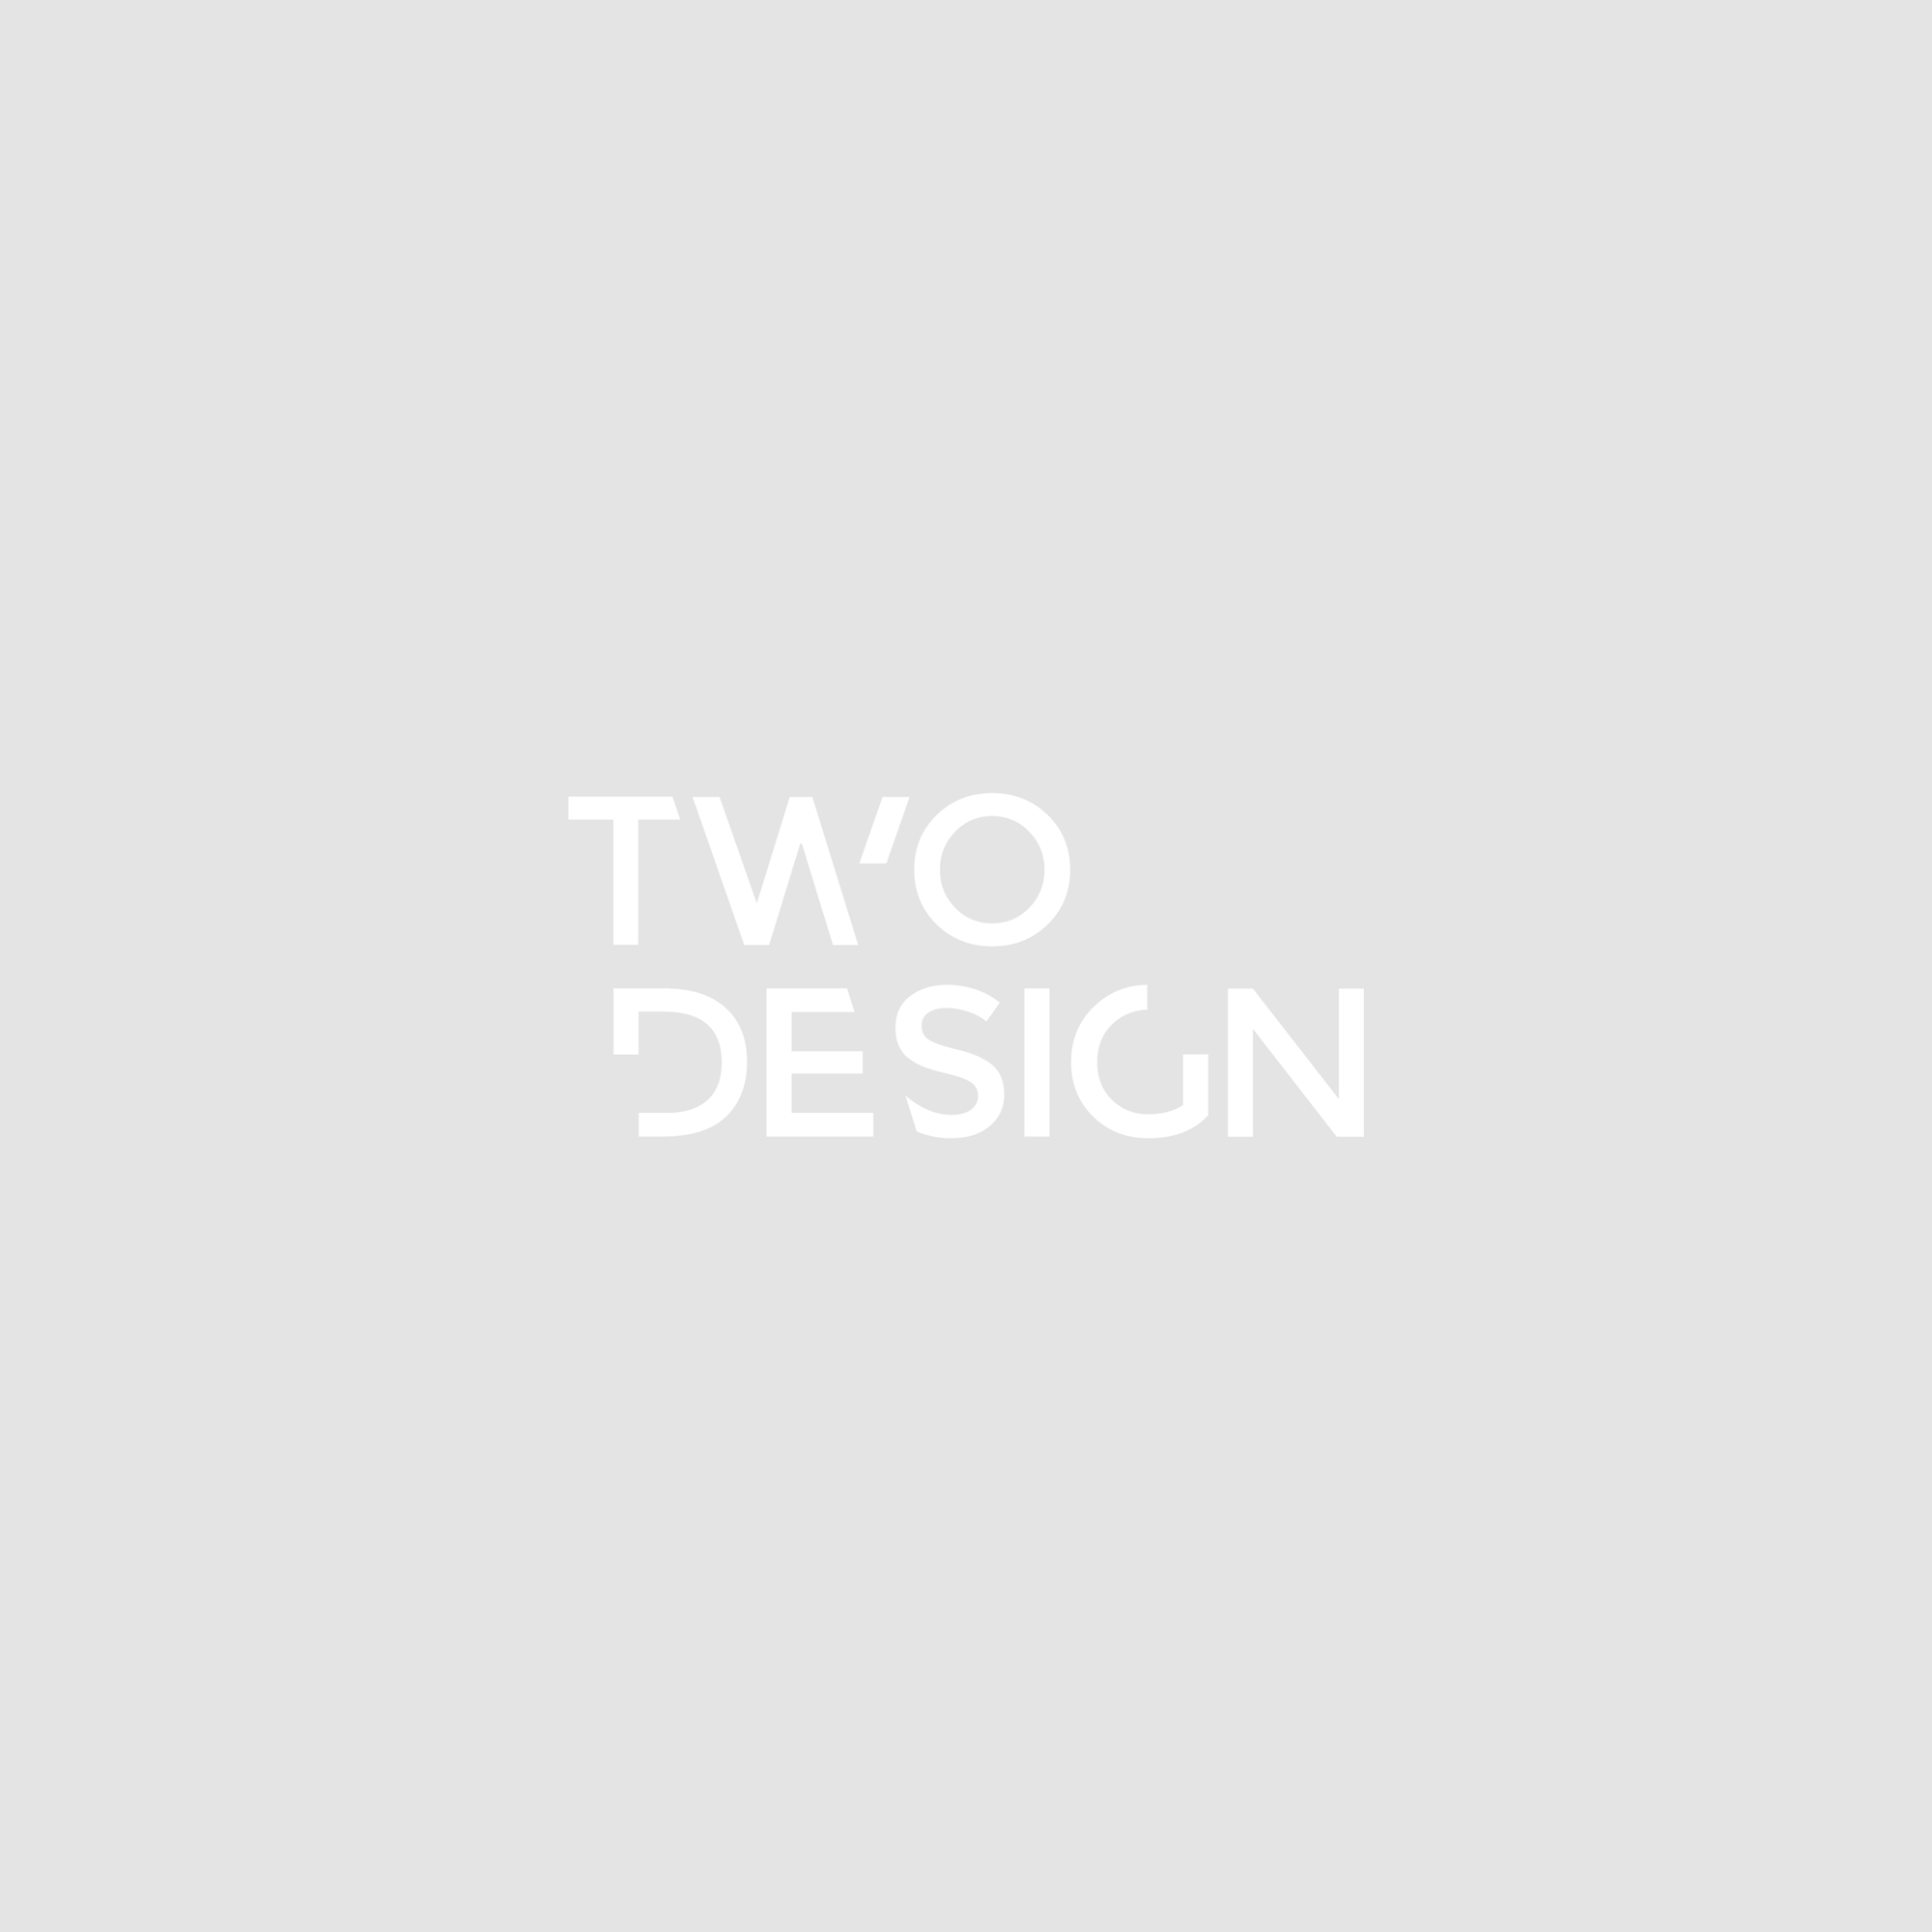 Two_design_placeholder 3.jpg